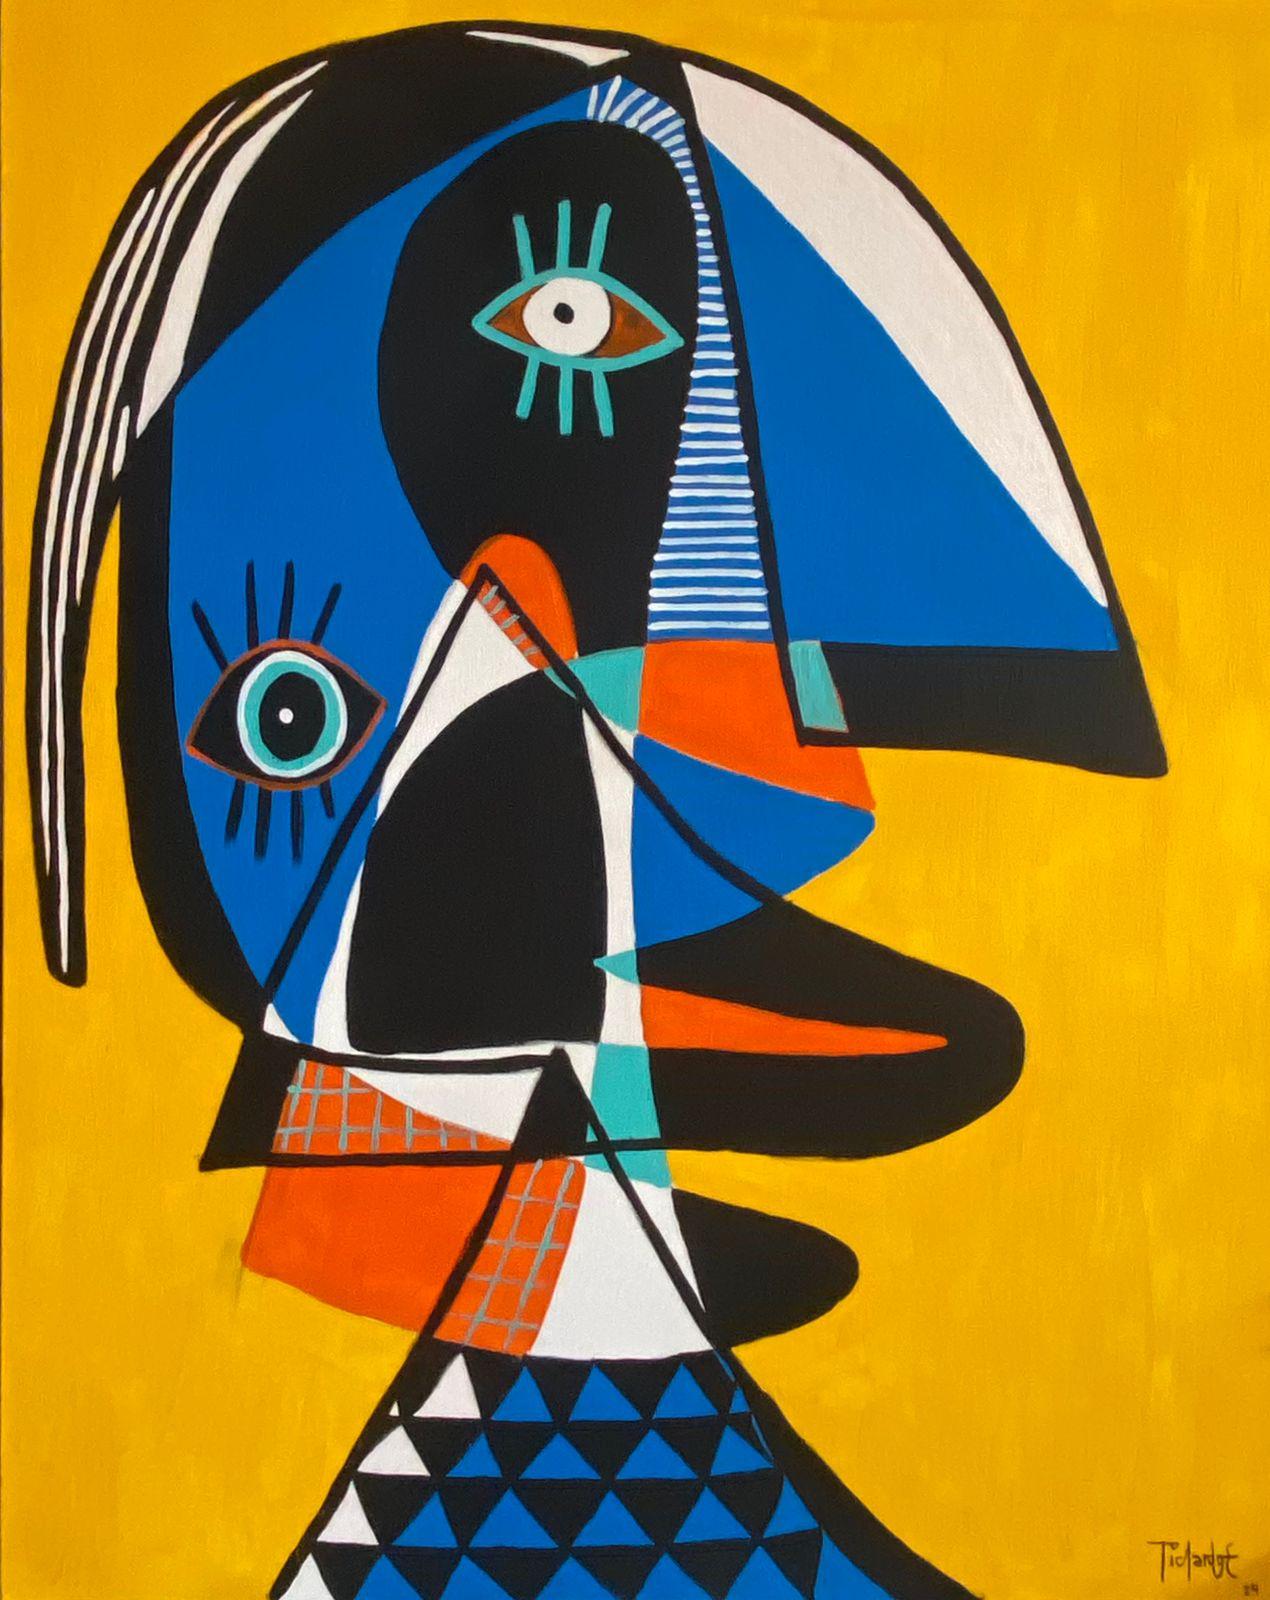 Art contemporain, peinture abstraite
Acrylique sur toile
152x122cm
Signé




A propos de l'artiste
Enrique Pichardo (Mexico, 1973) est diplômé de l'Escuela Nacional de Pintura, Escultura y Grabado (ENPEG) "La Esmeralda". En tant qu'artiste de